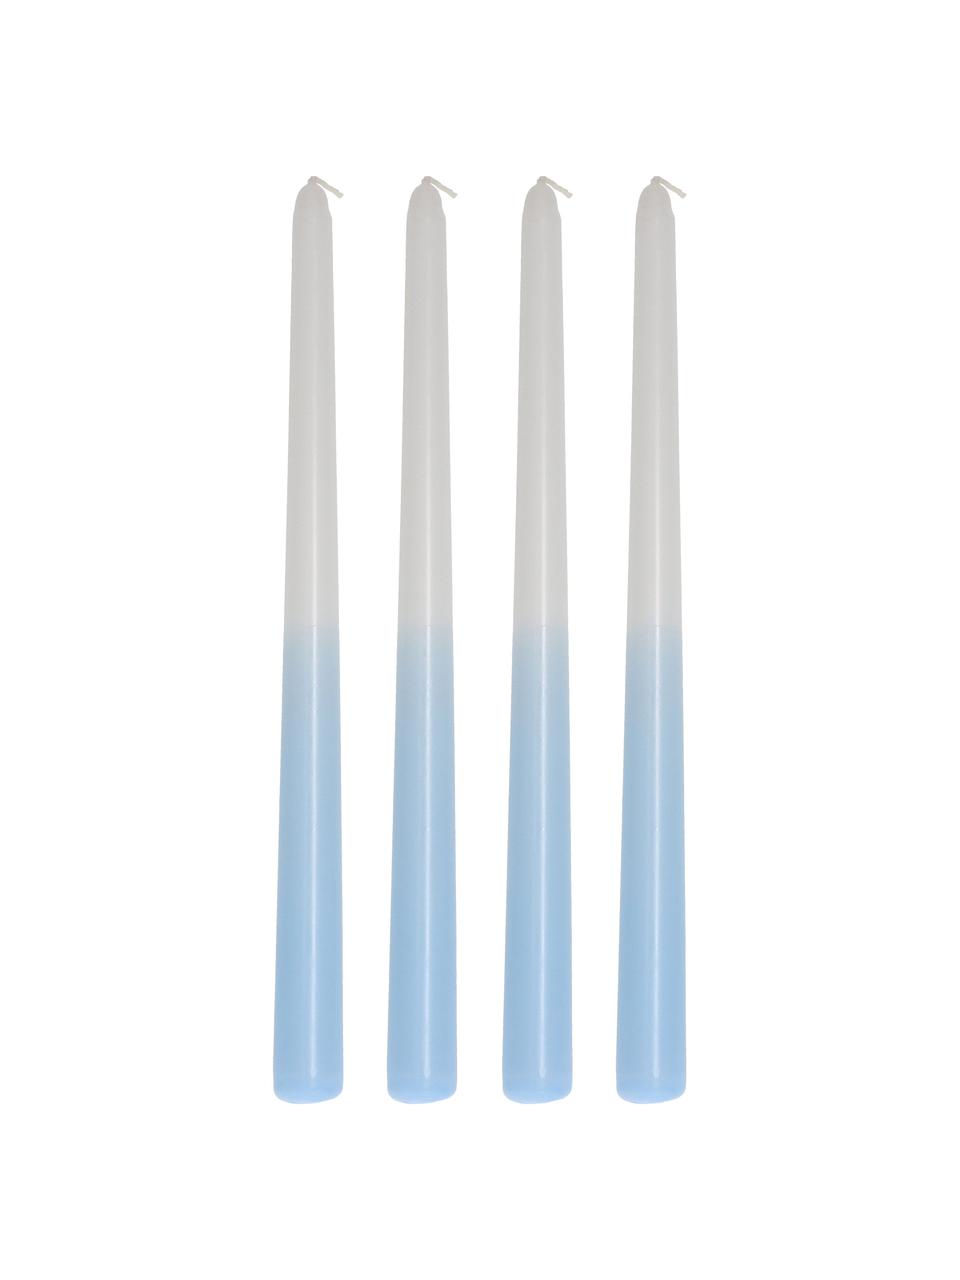 Candela bastone color azzurro/bianco Dubli 4 pz, Cera, Blu, bianco, Ø 2 x Alt. 31 cm